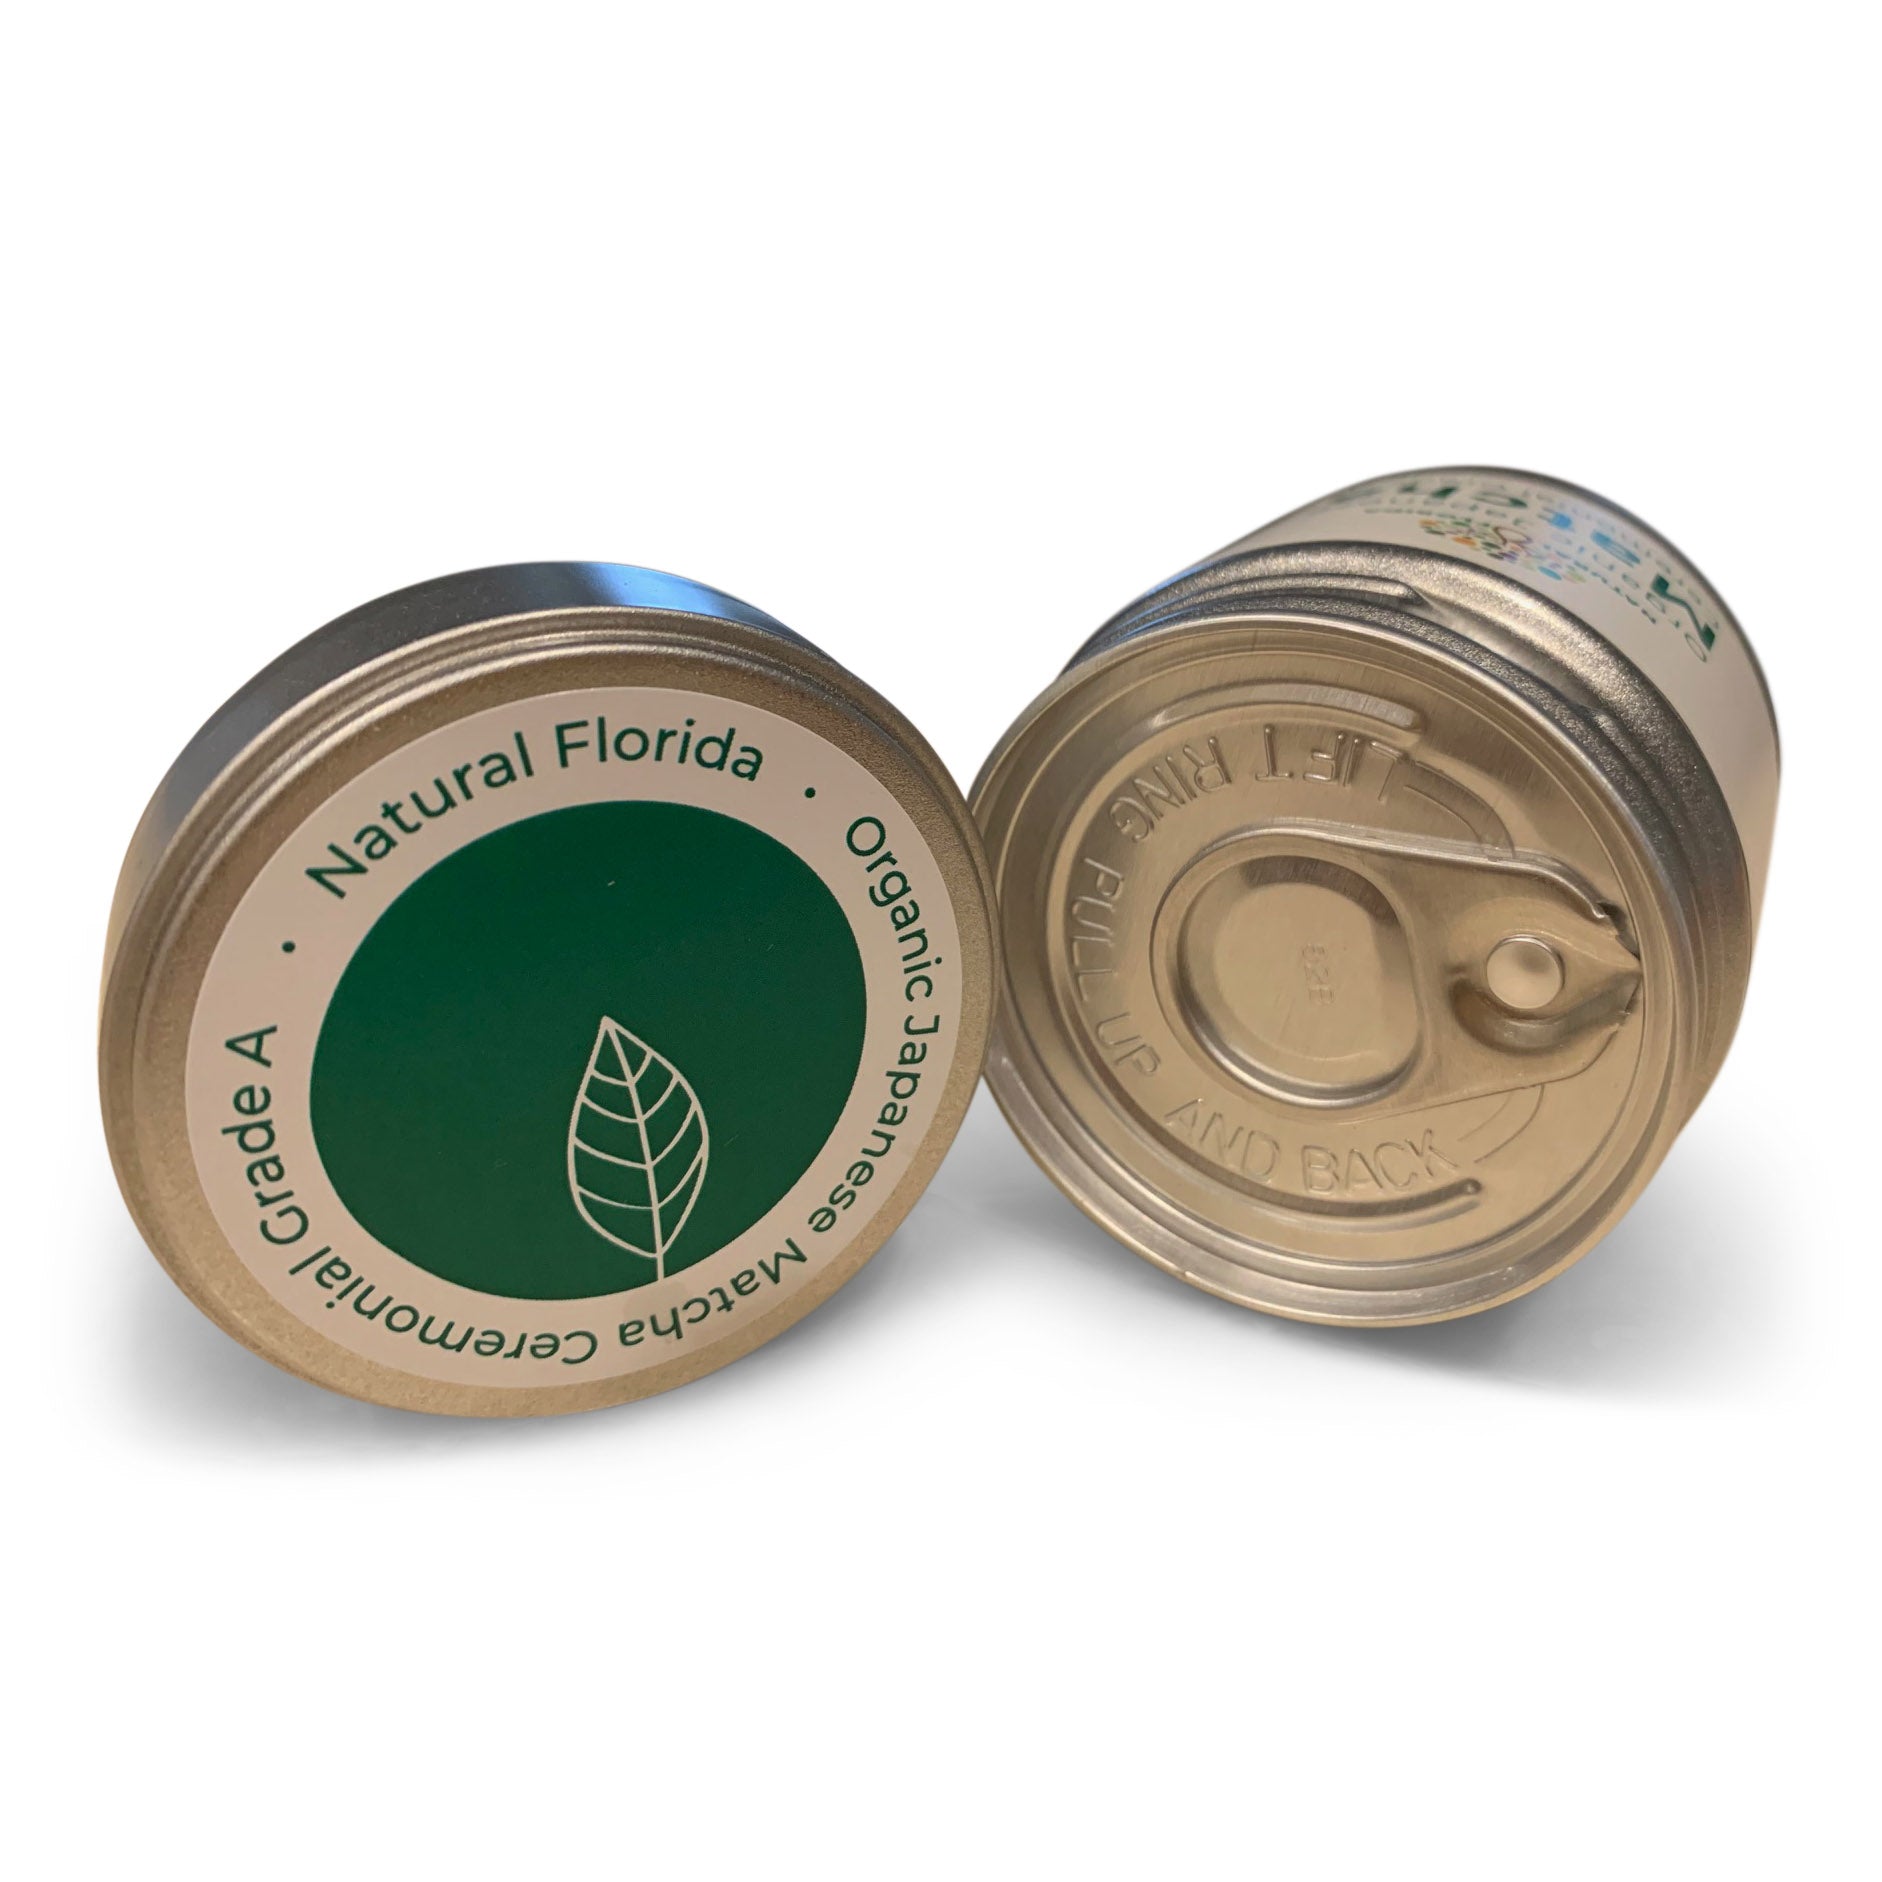 Matcha Ceremonial Grade Tea. Organic. Vegan. nonGMO. FREE Shipping. Natural Florida quality